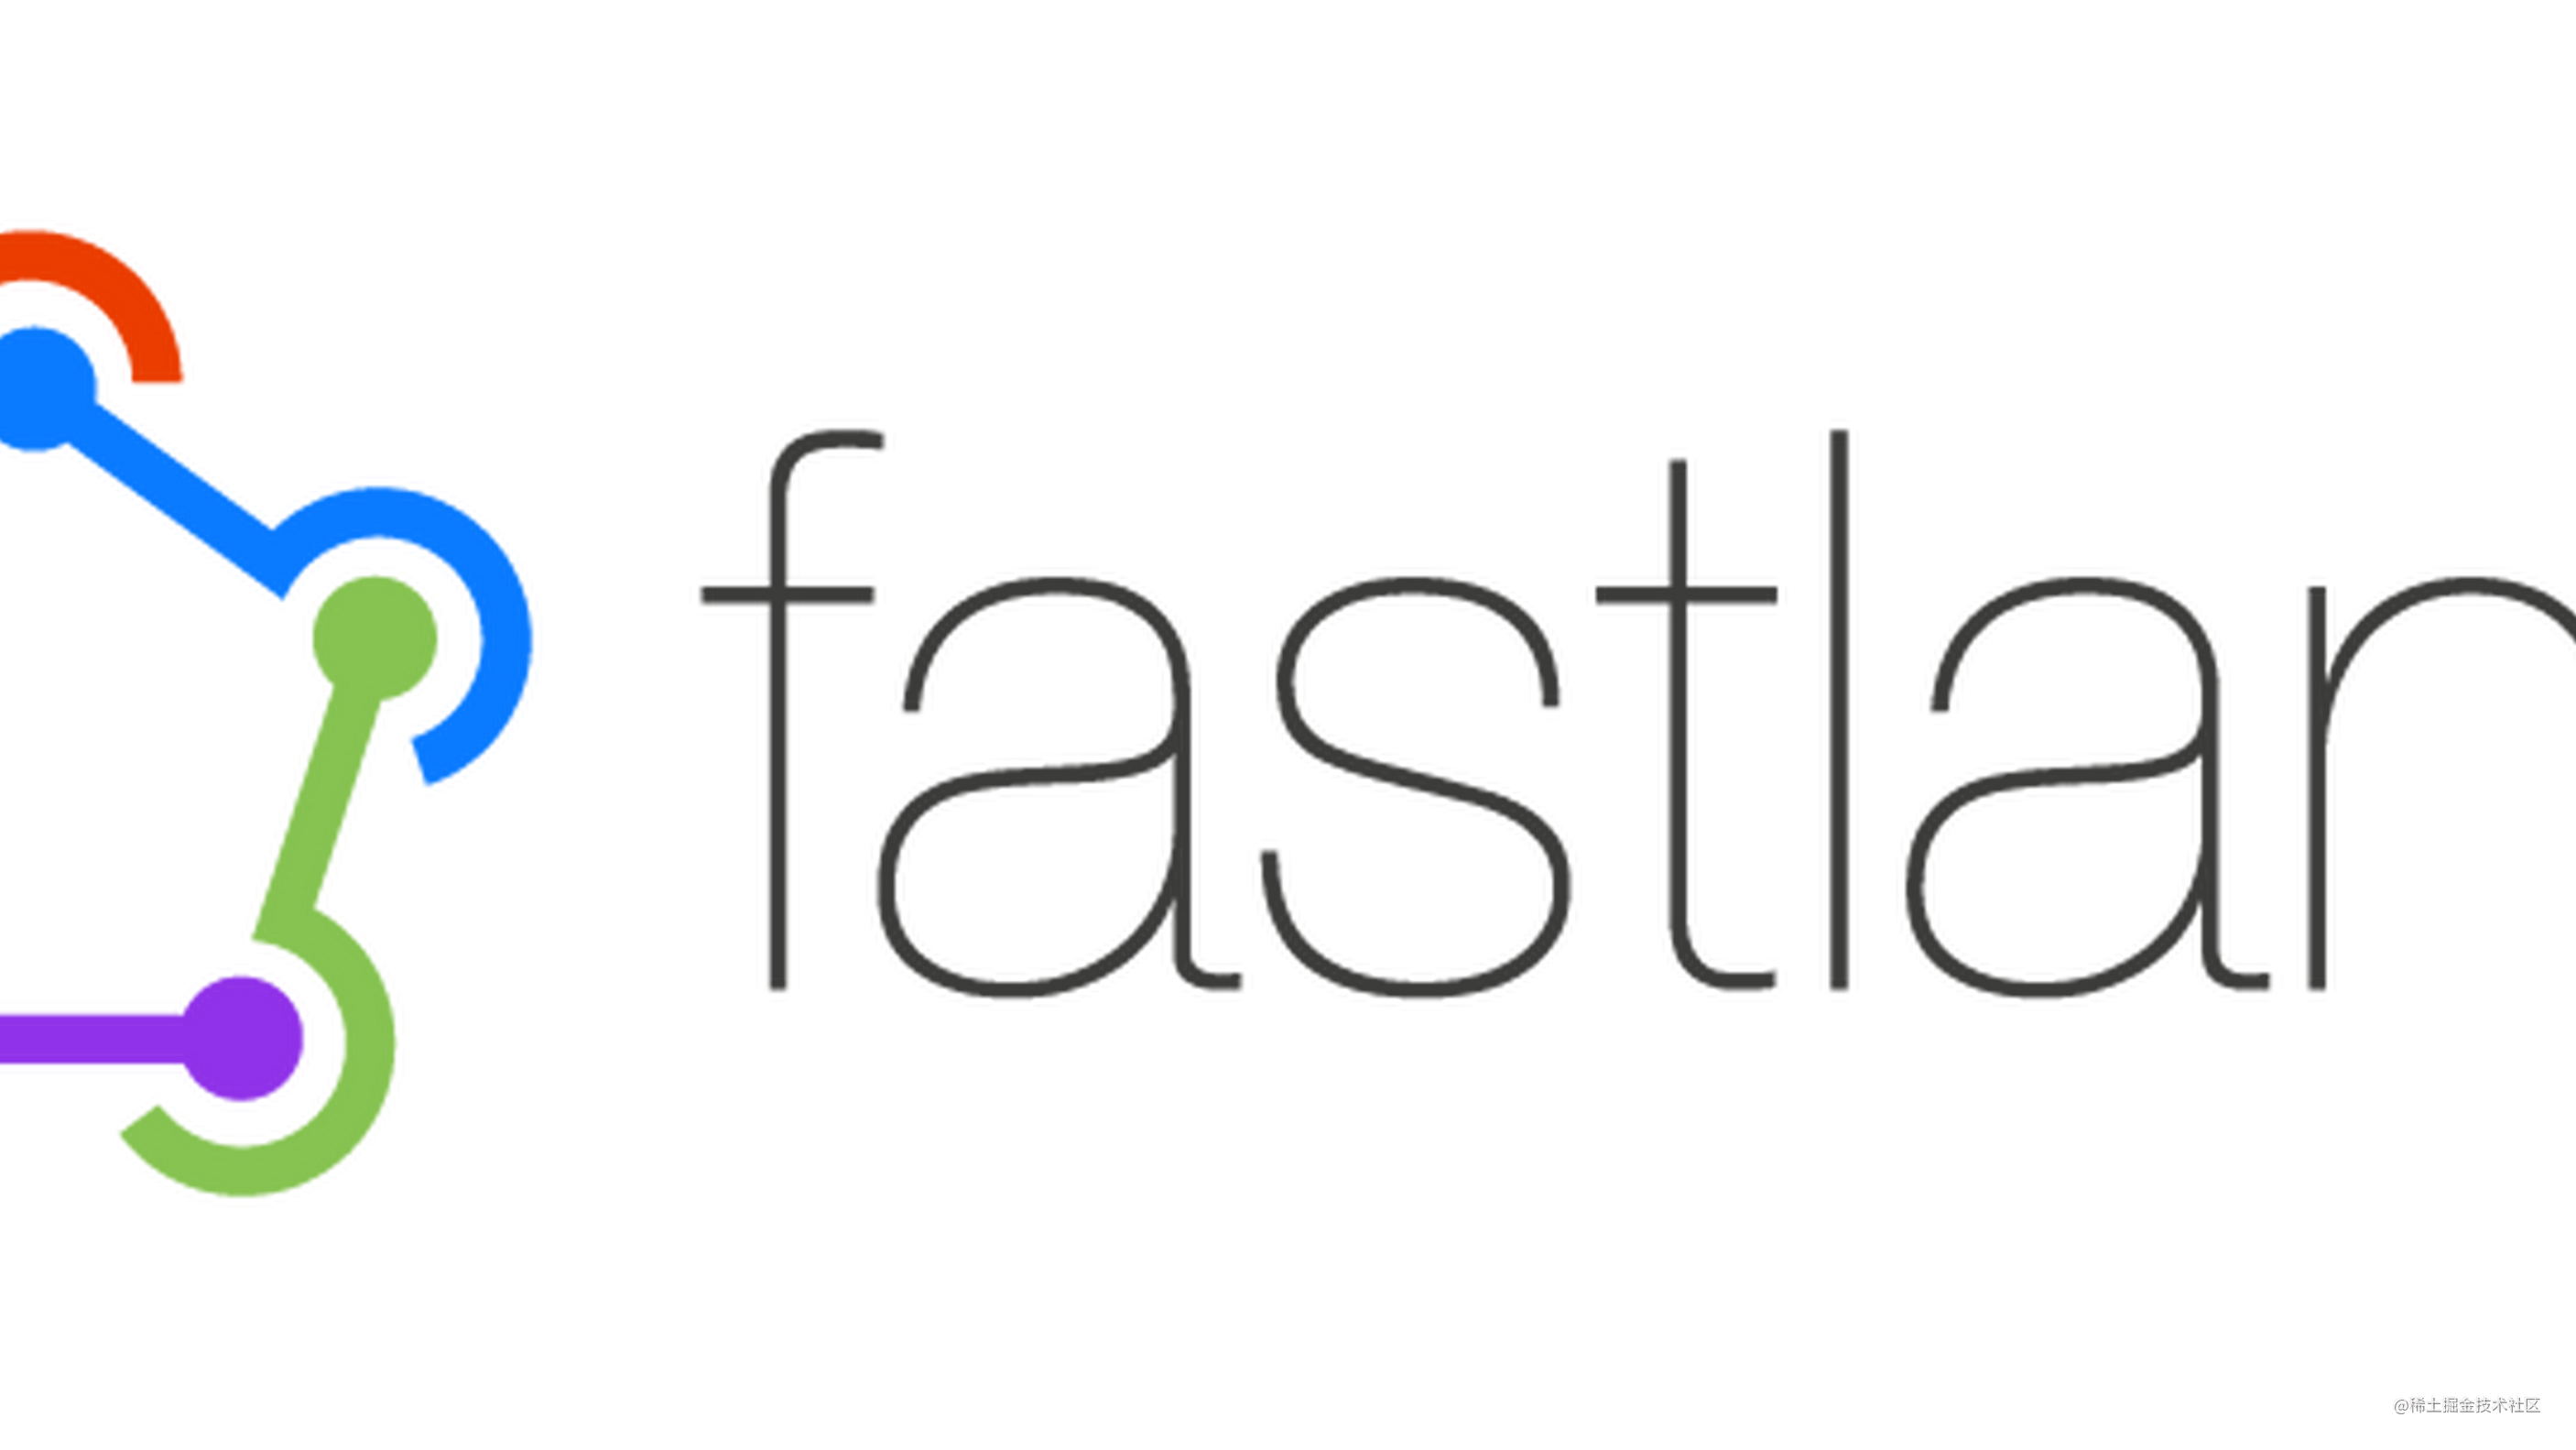 IOS/Android 通过 fastlane 持续集成 Jenkins 自动化打包发布（一）